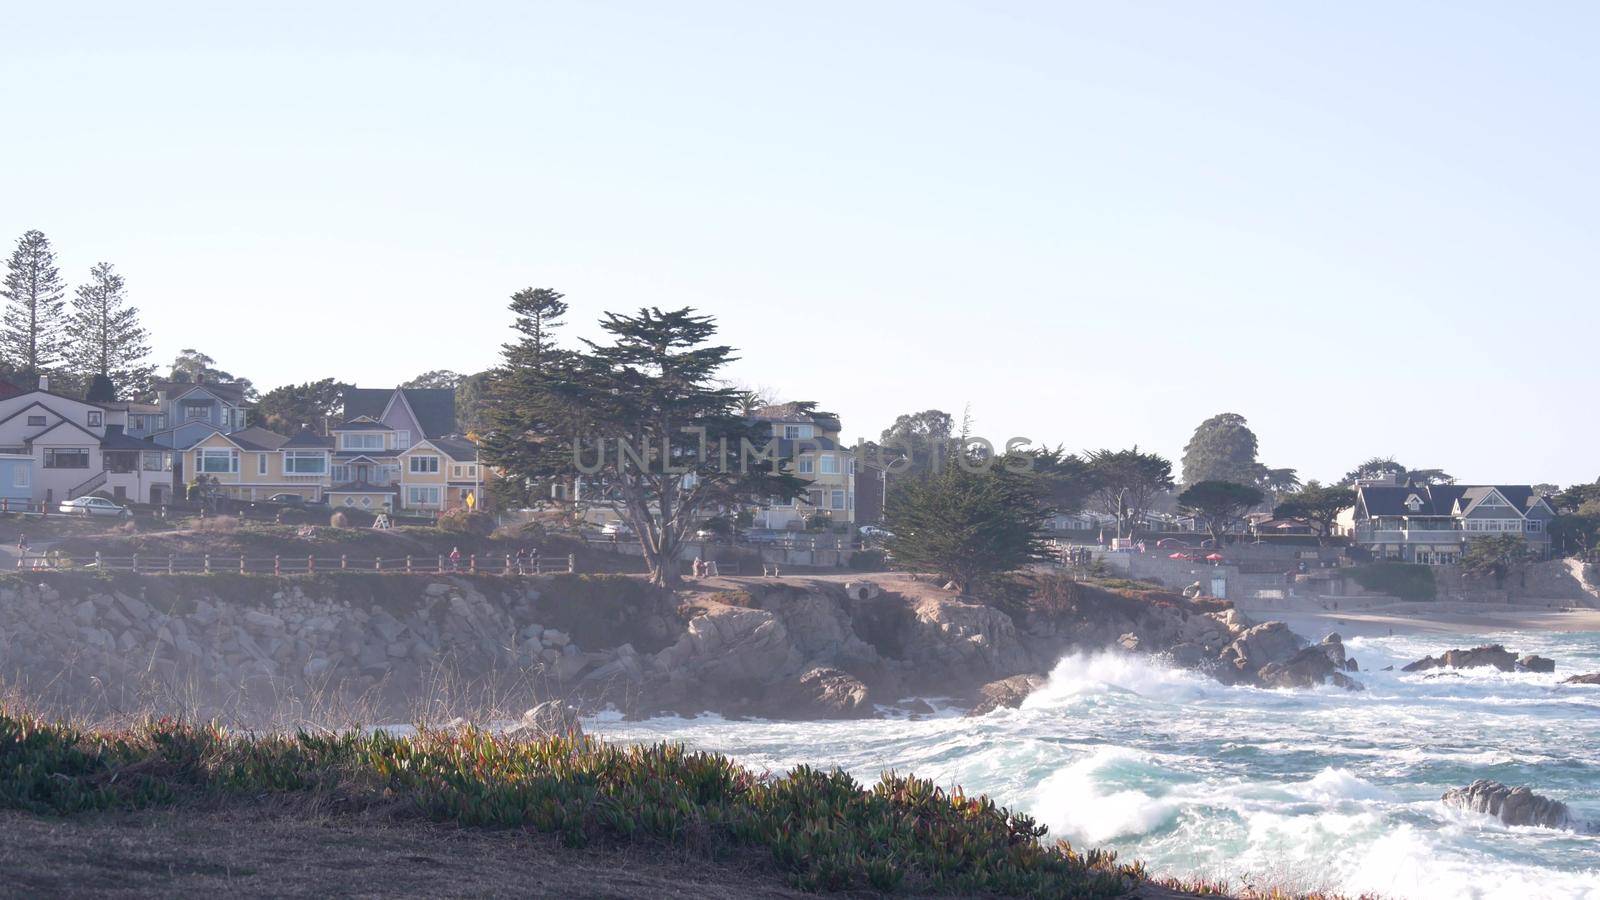 Rocky craggy ocean beach, sea waves crashing on shore, Monterey 17-mile drive, California coast, USA. Pacific Grove, beachfront waterfront promenade, waterside historic houses, colonial architecture.